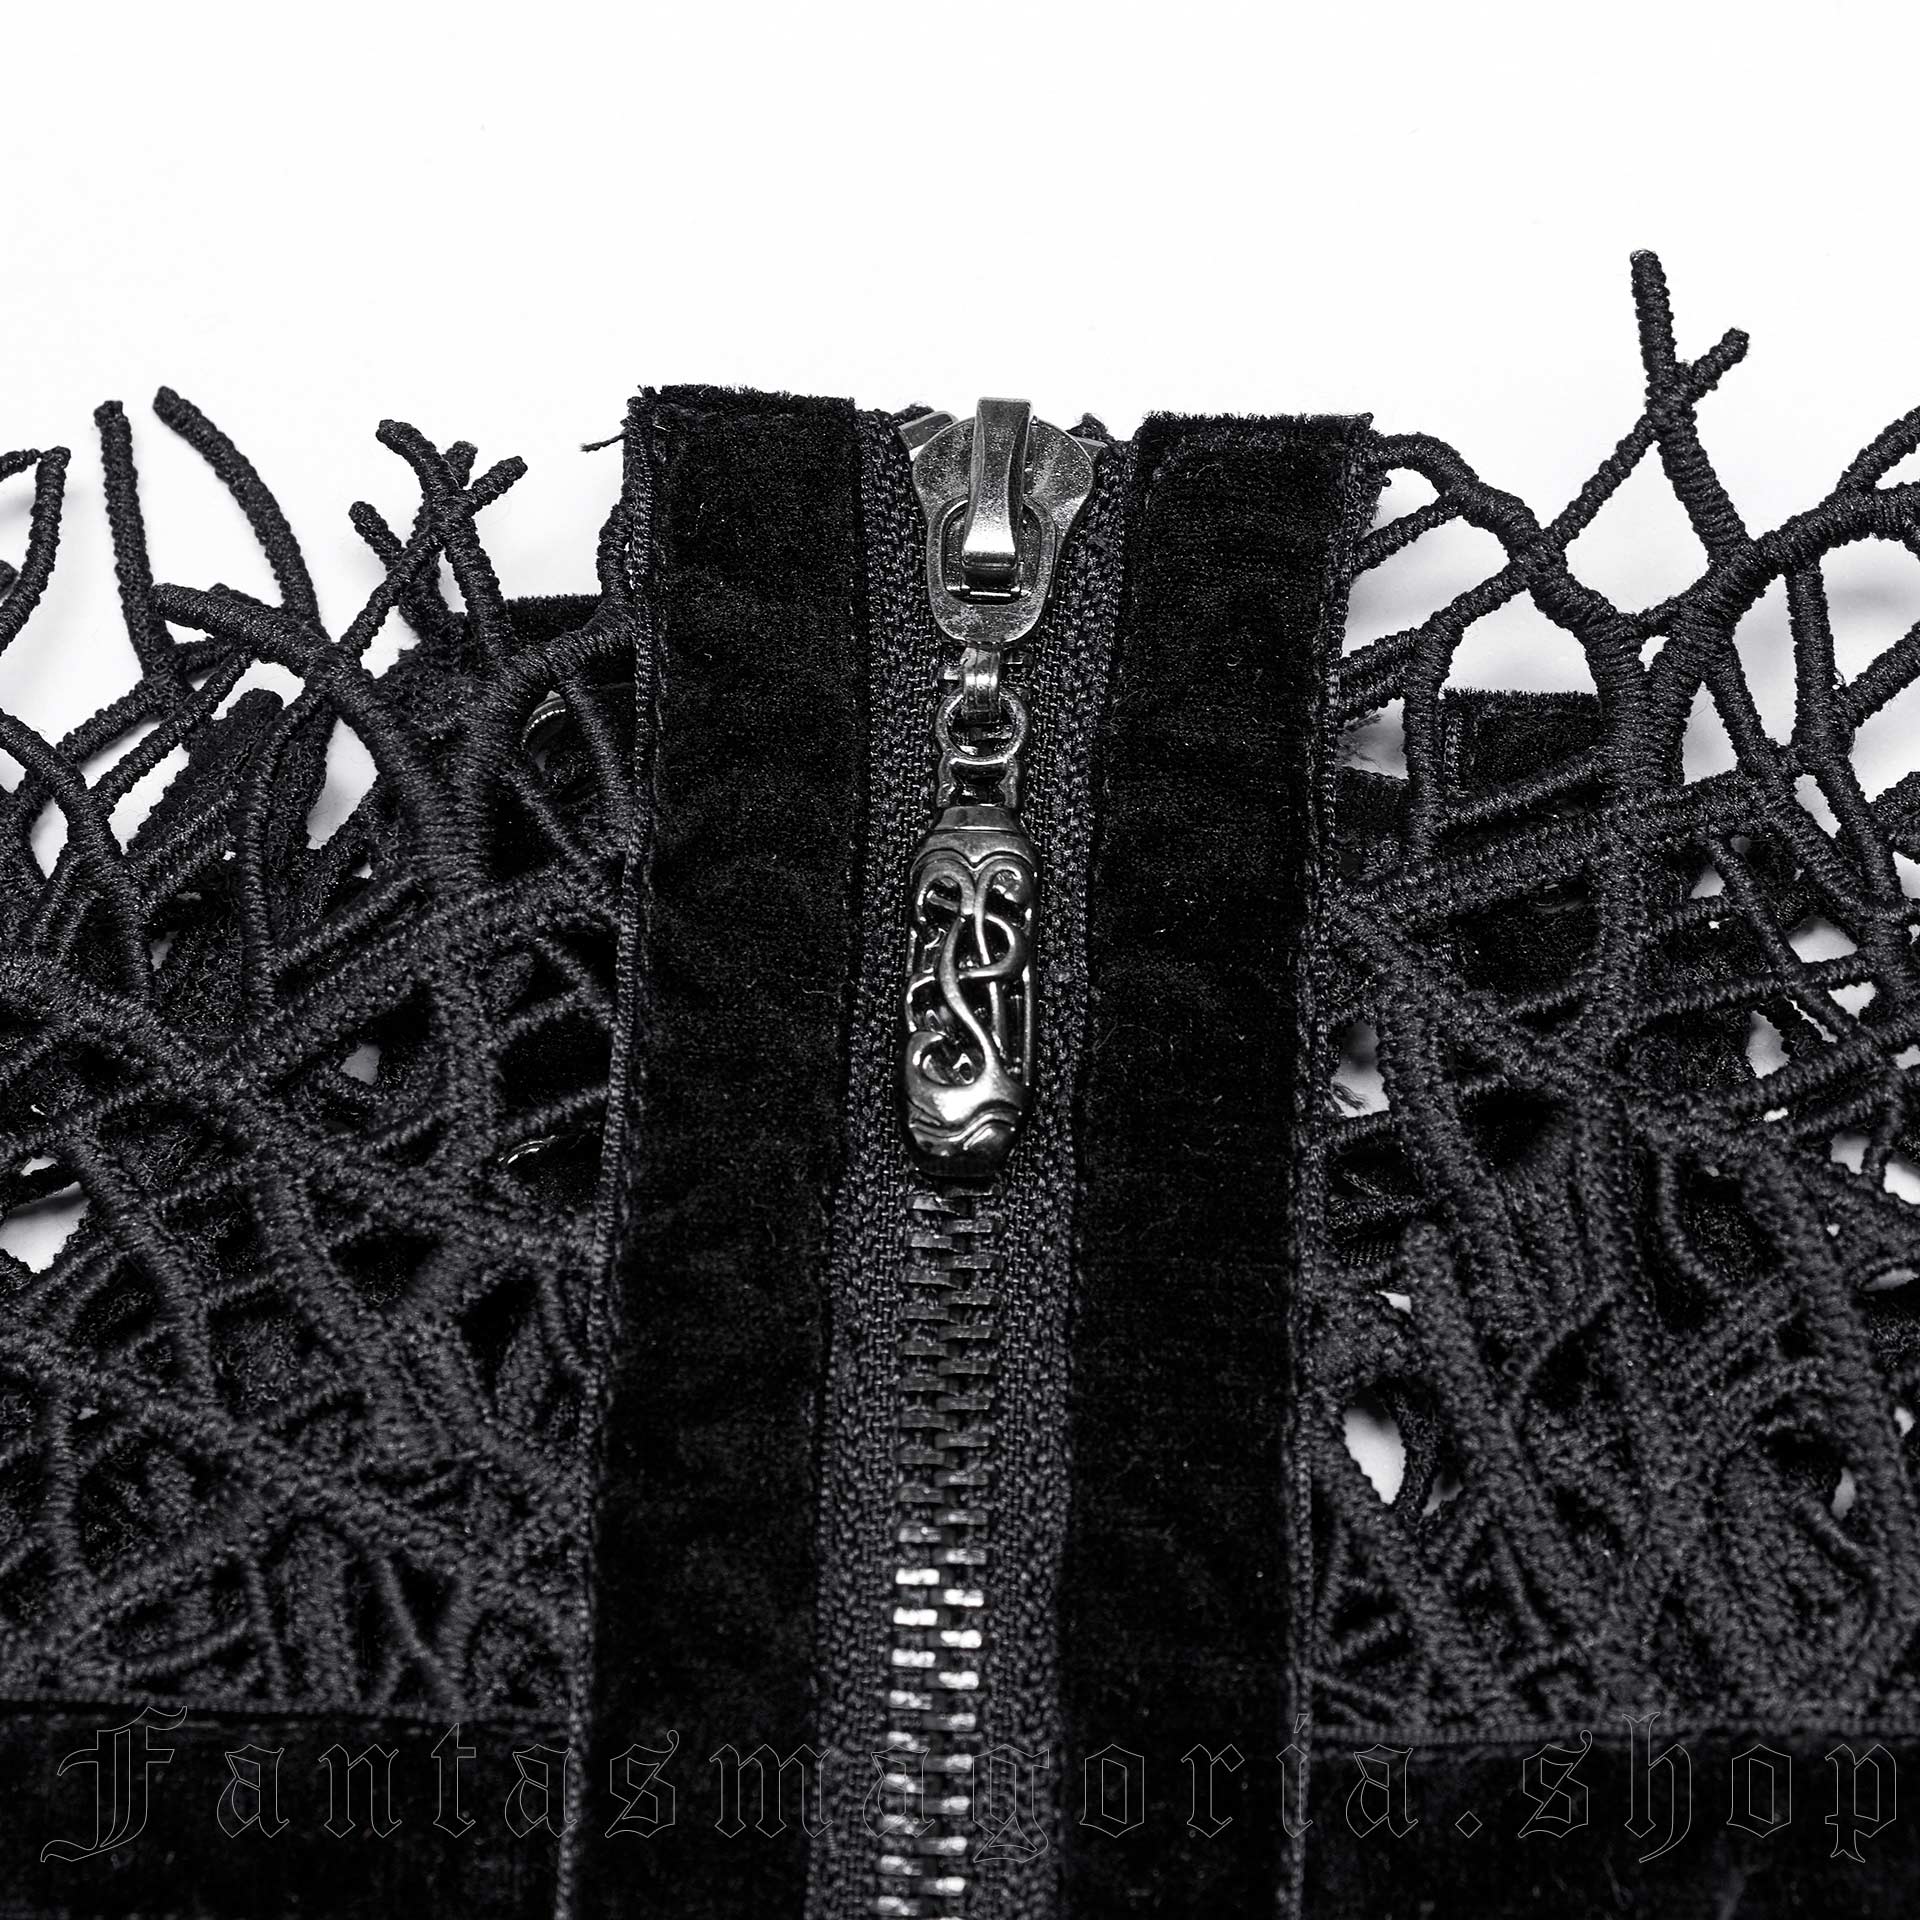 Gothic abstract lace applique corset belt.